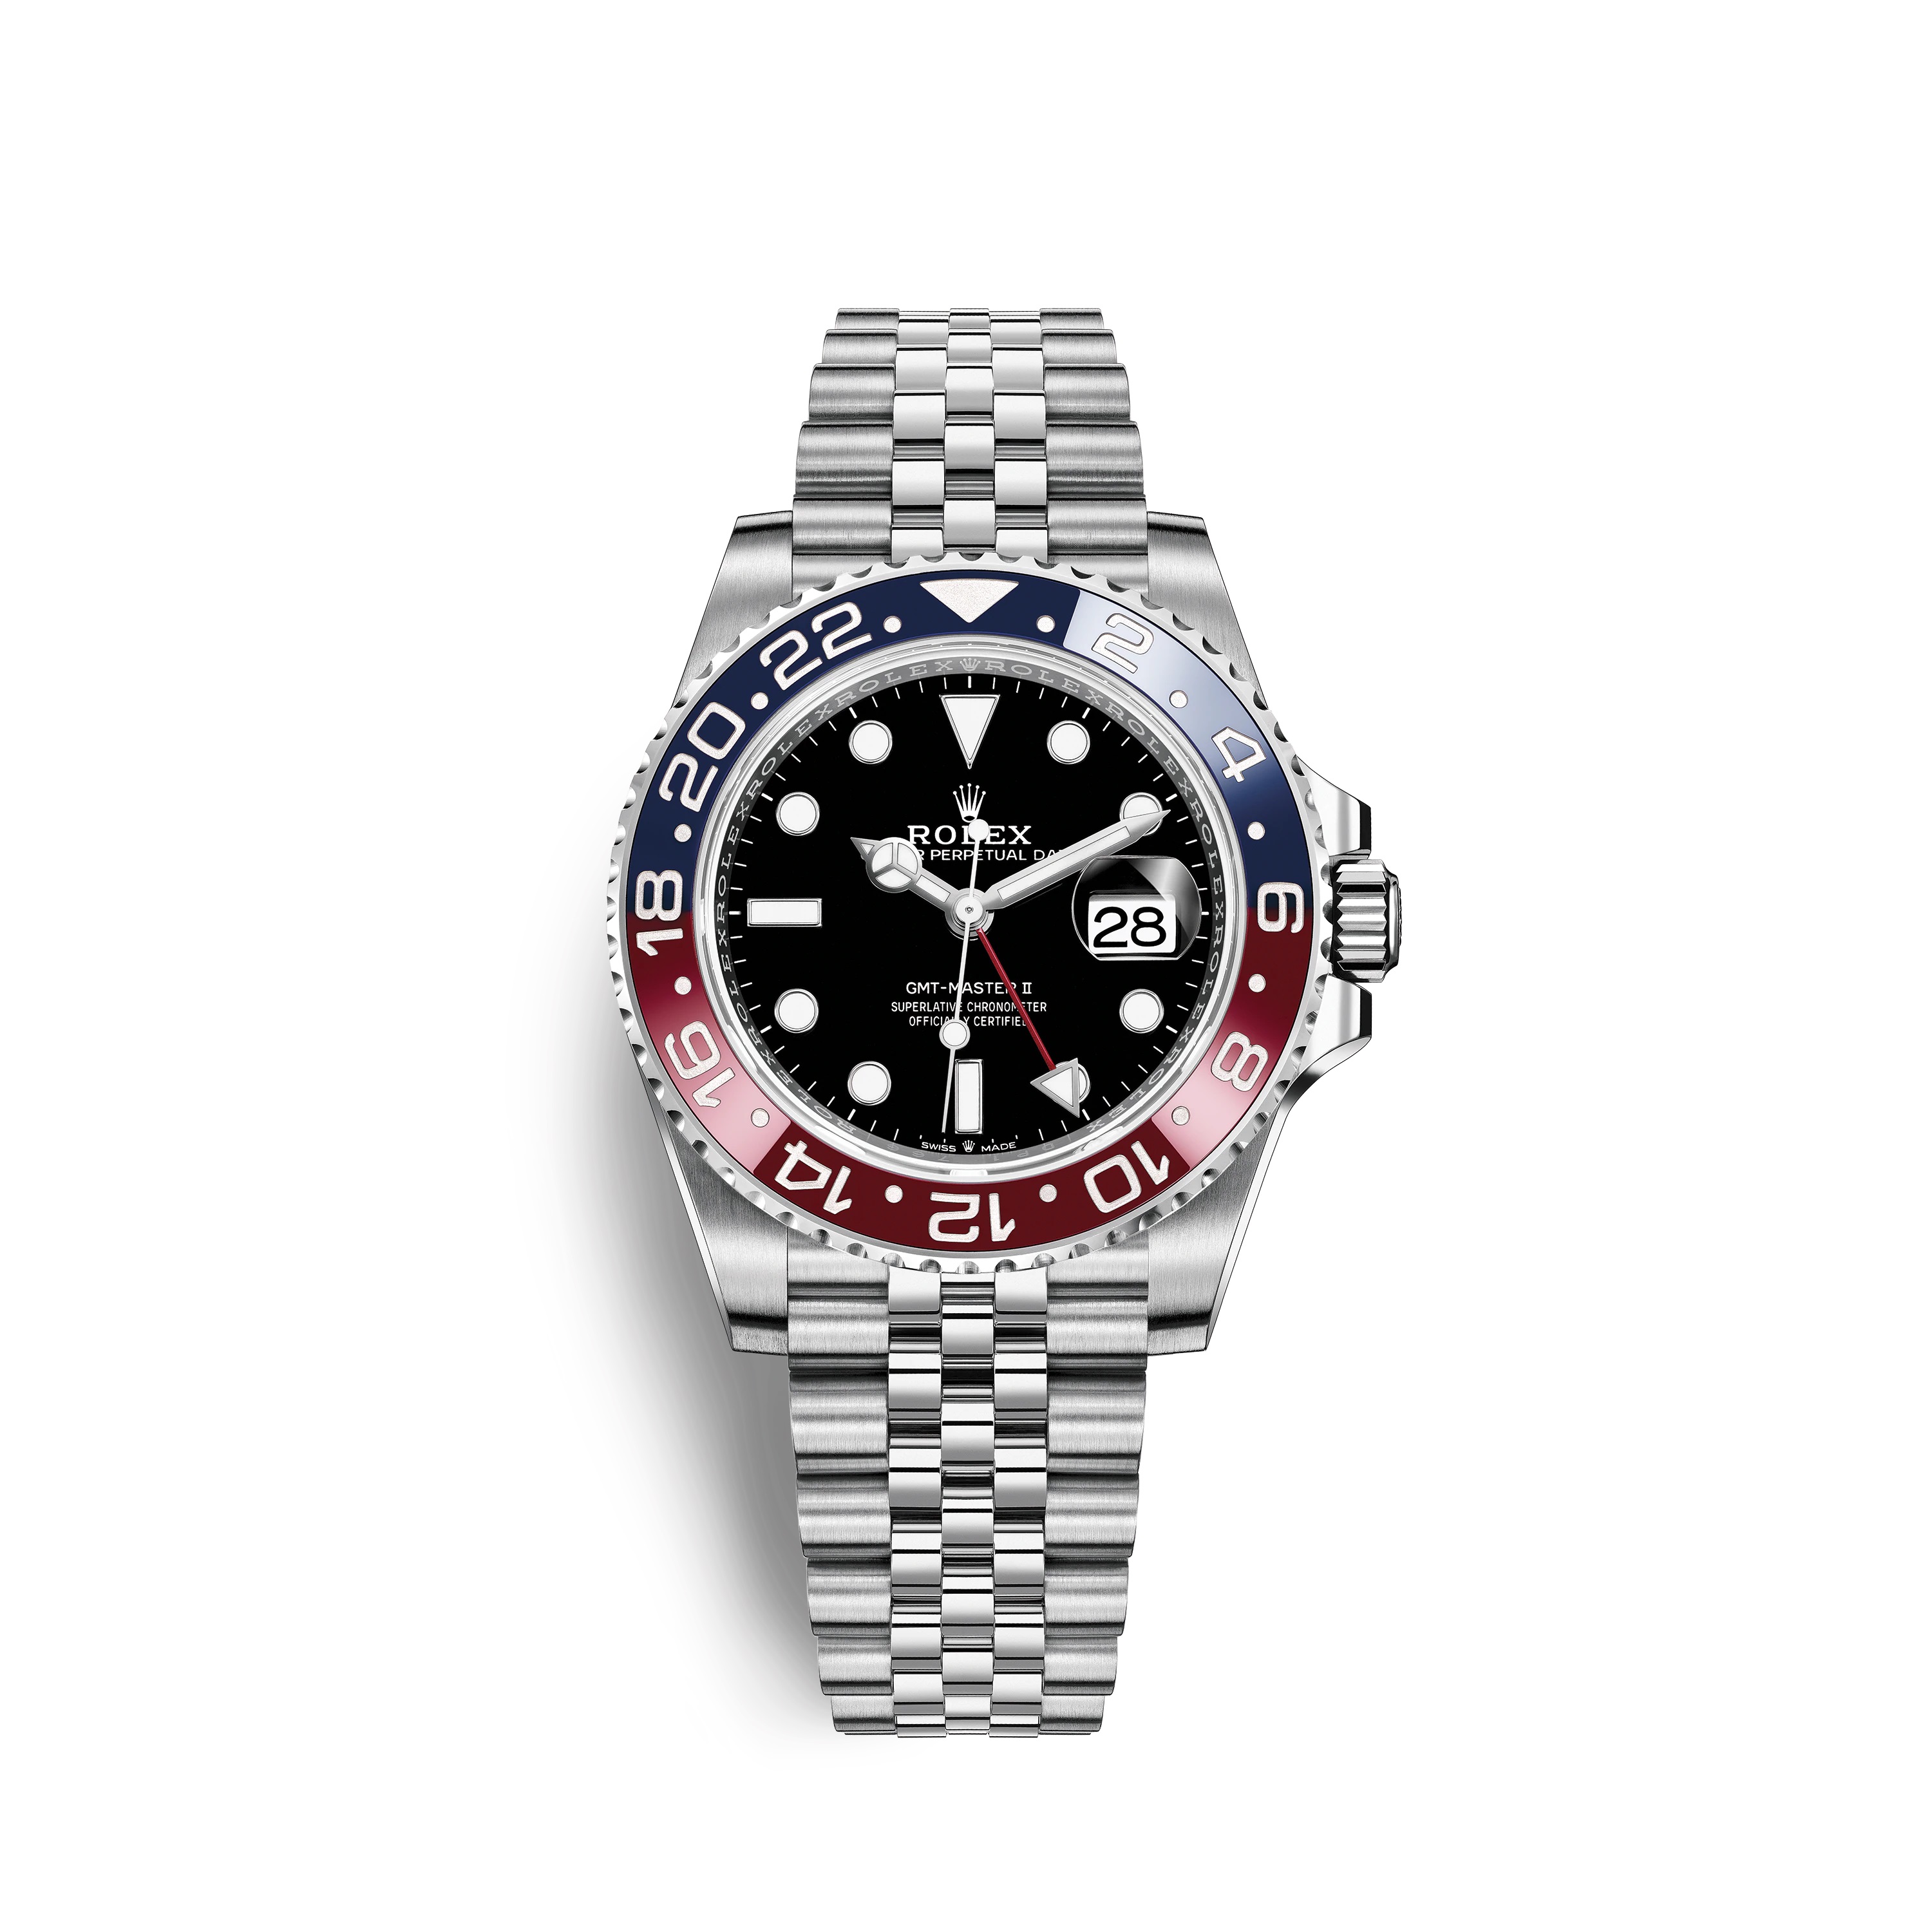 GMT-Master II 126710BLRO Stainless Steel Watch (Black)